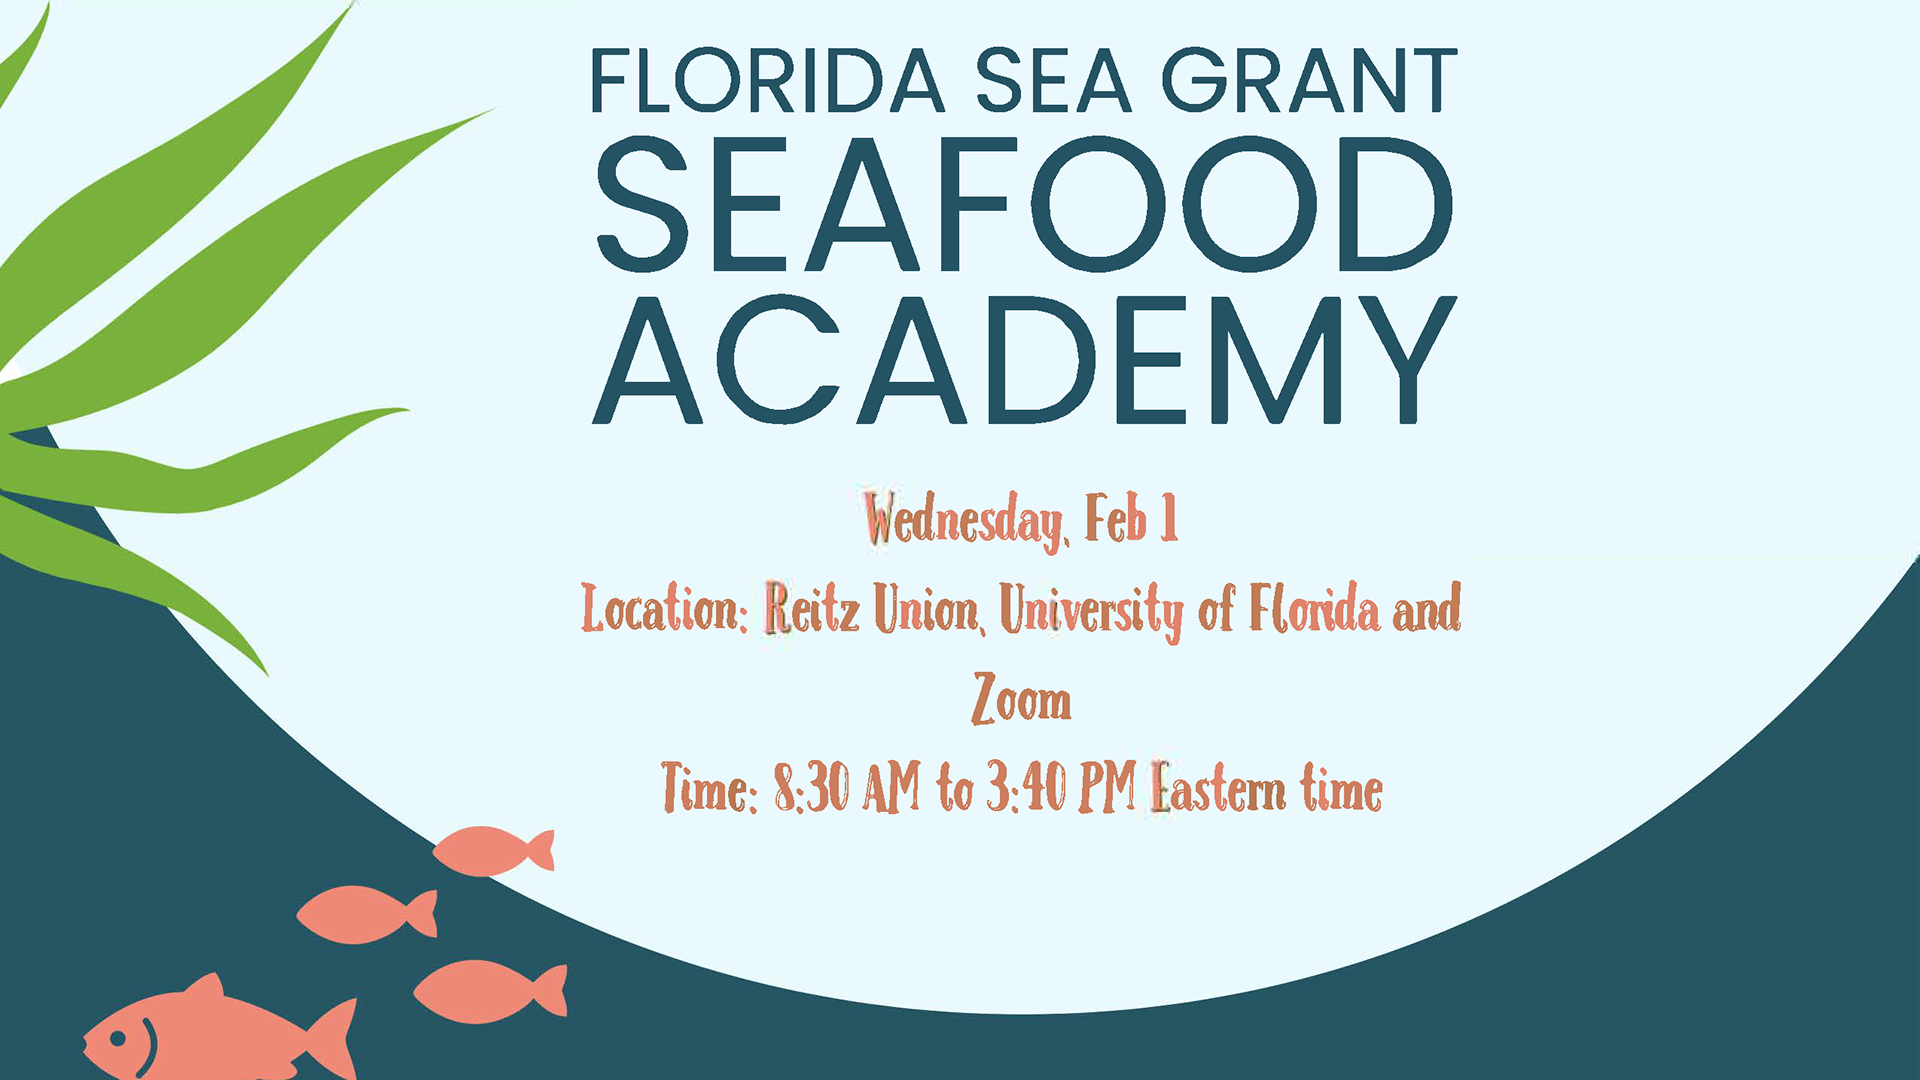 Florida Sea Grant Seafood Academy event flyer